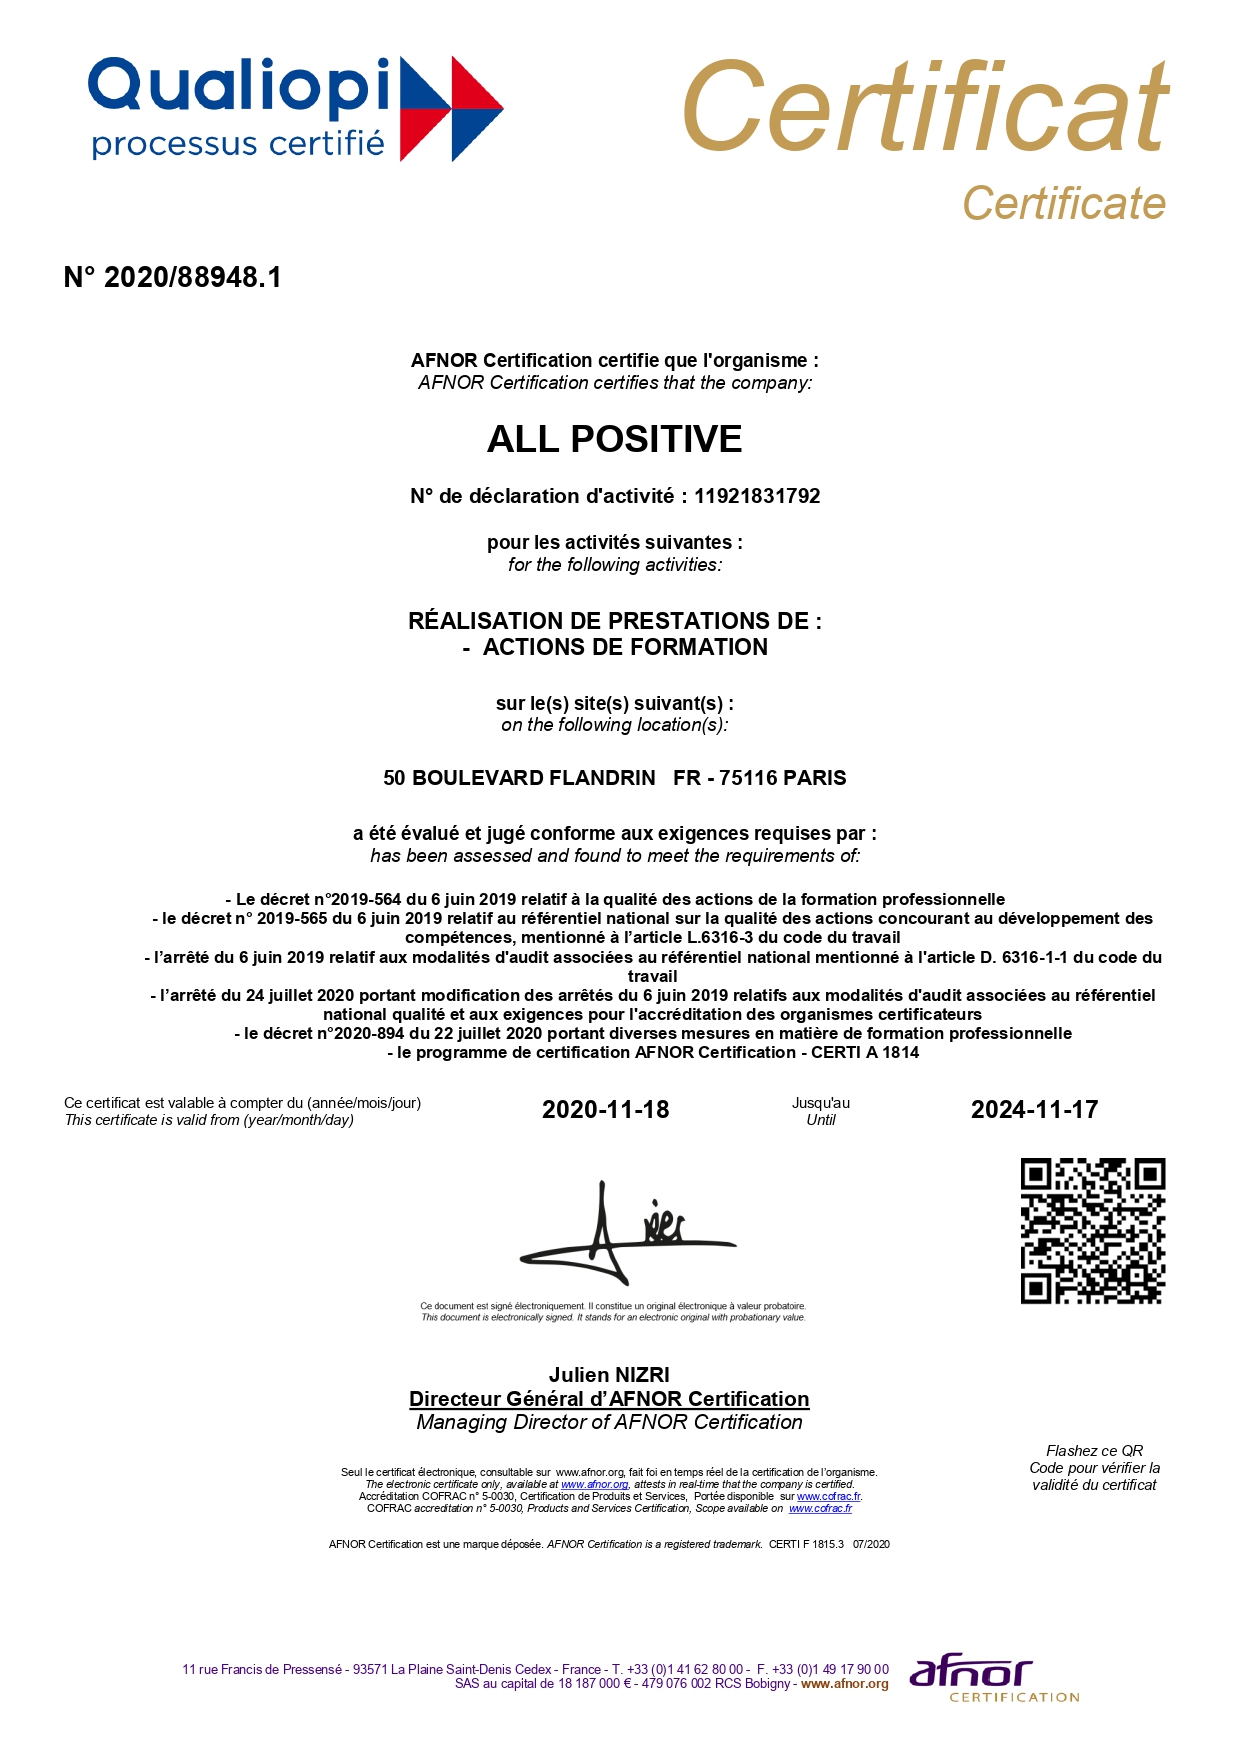 certificat-all-positive-Qualiopi-Afnor